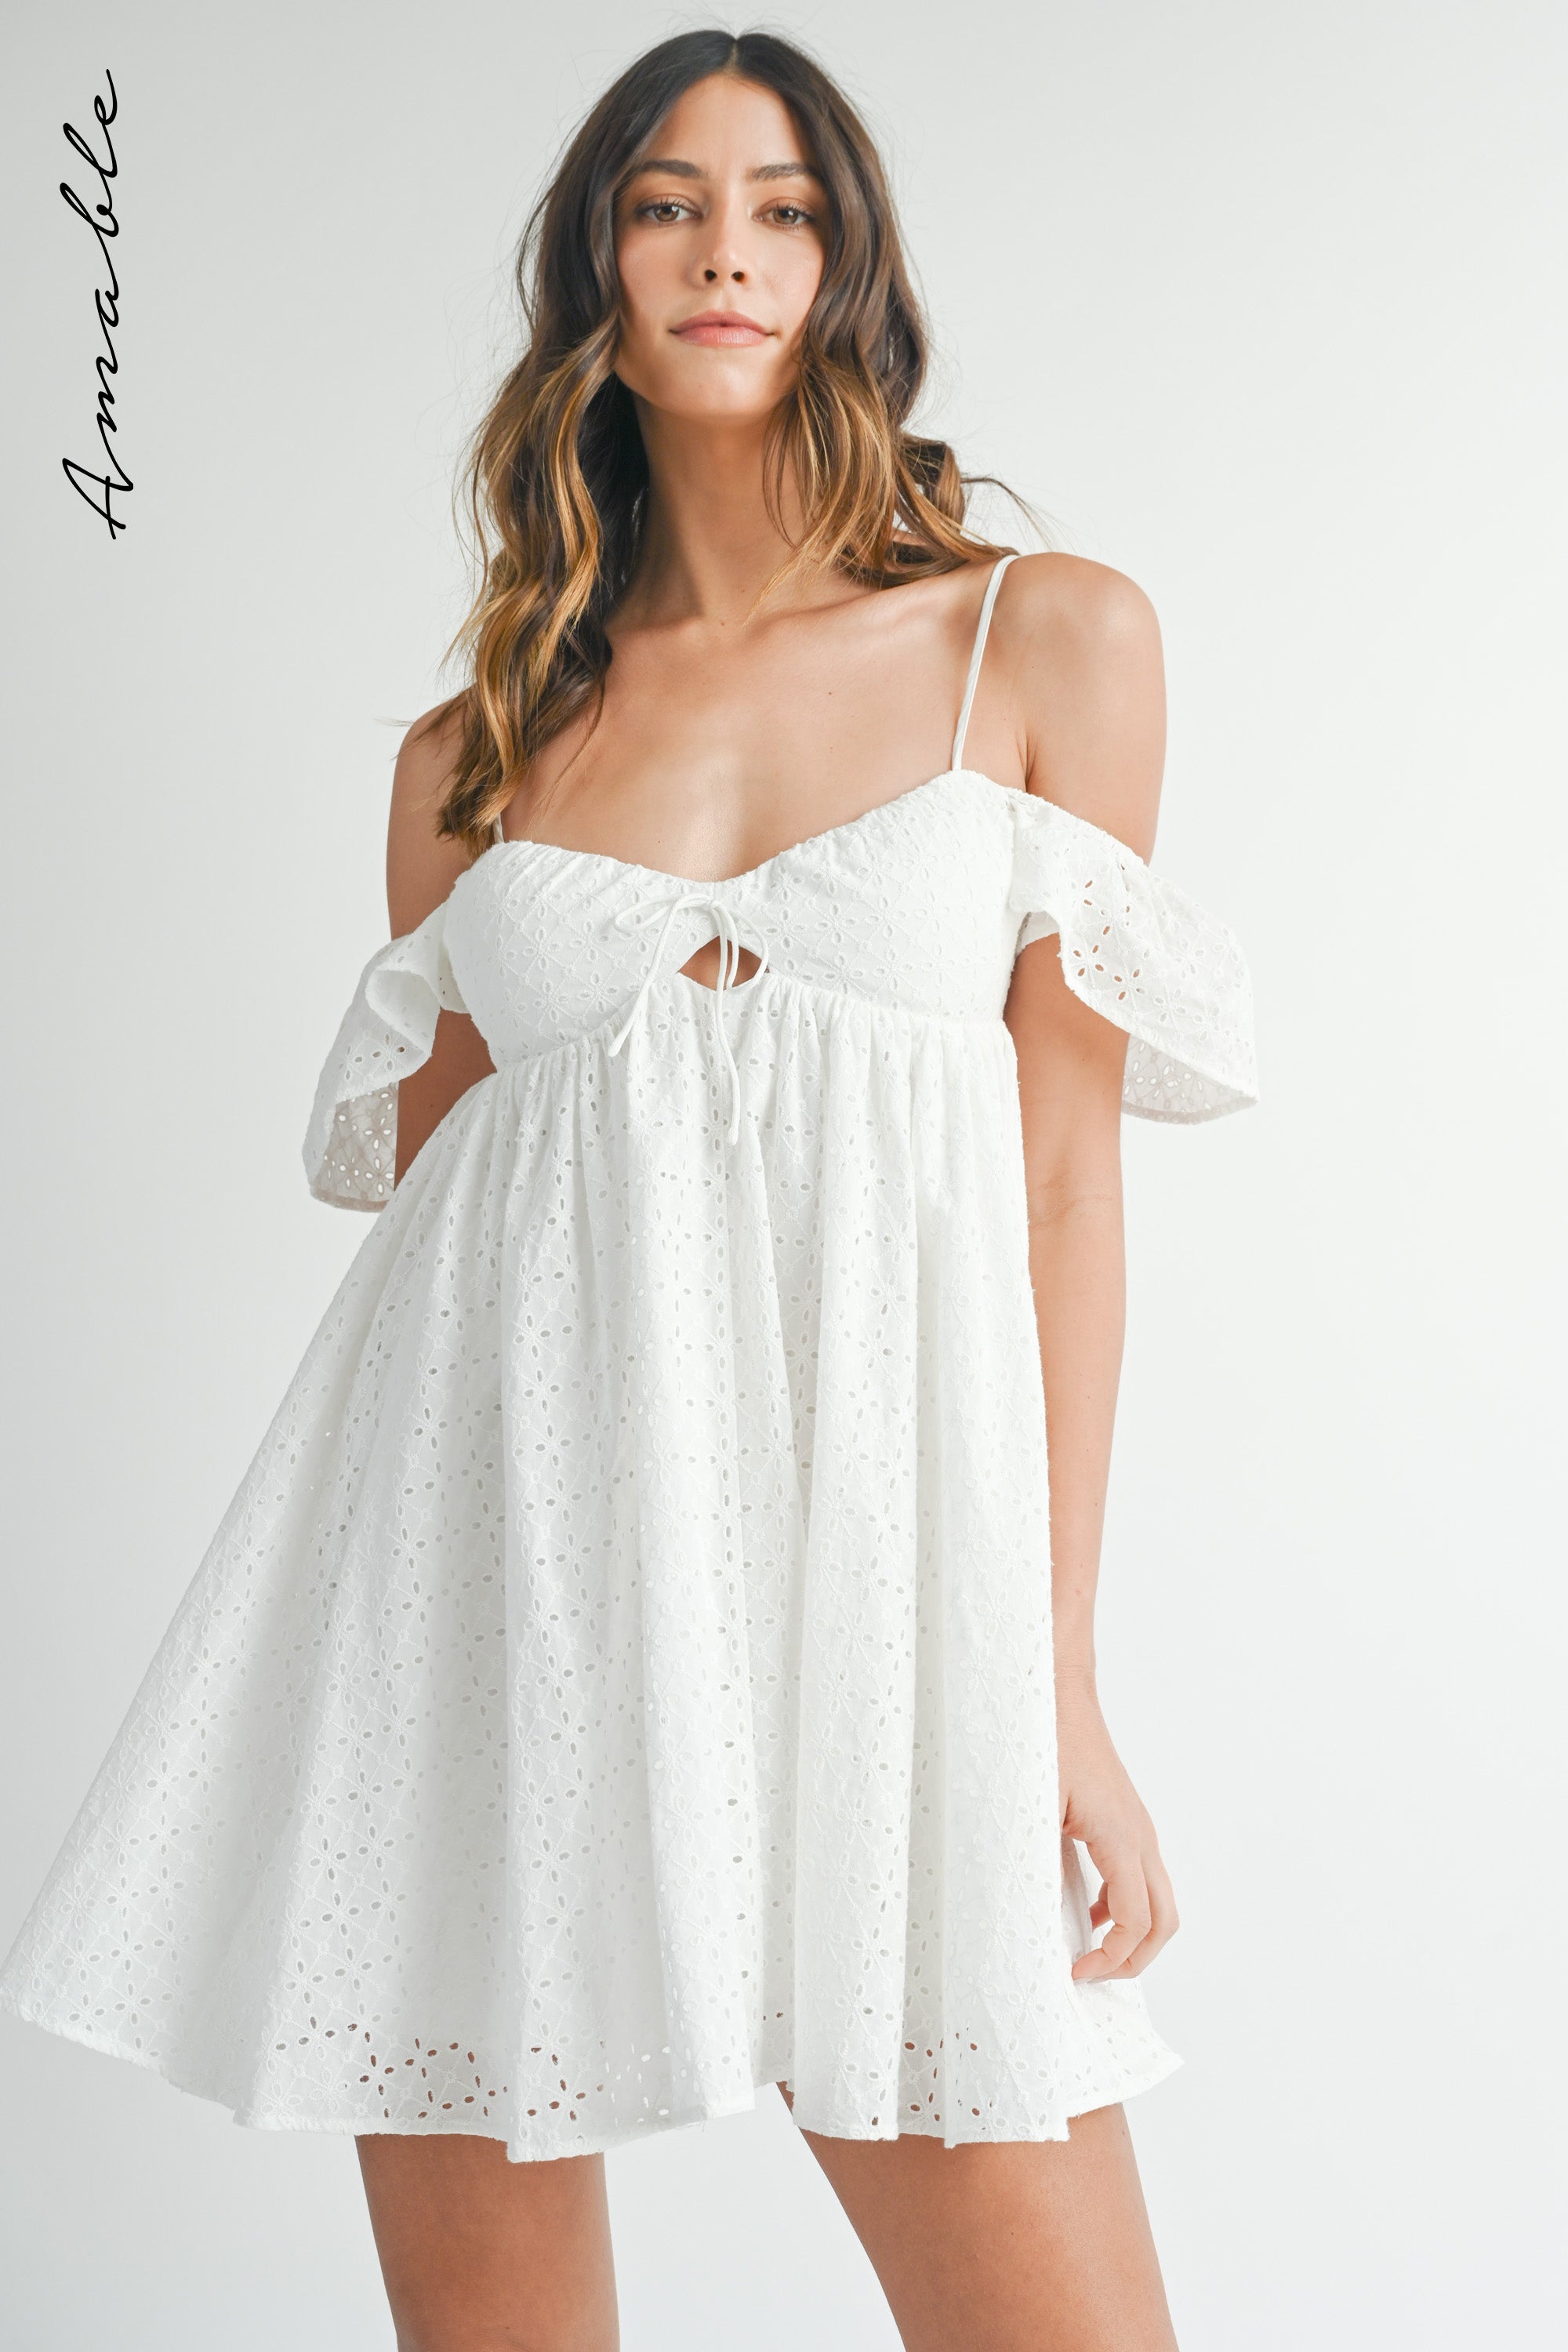 Summer Bloom Balloon Sleeve Lace Overlay Mini Dress White  White mini  dress, Formal dress shops, White lace mini dress